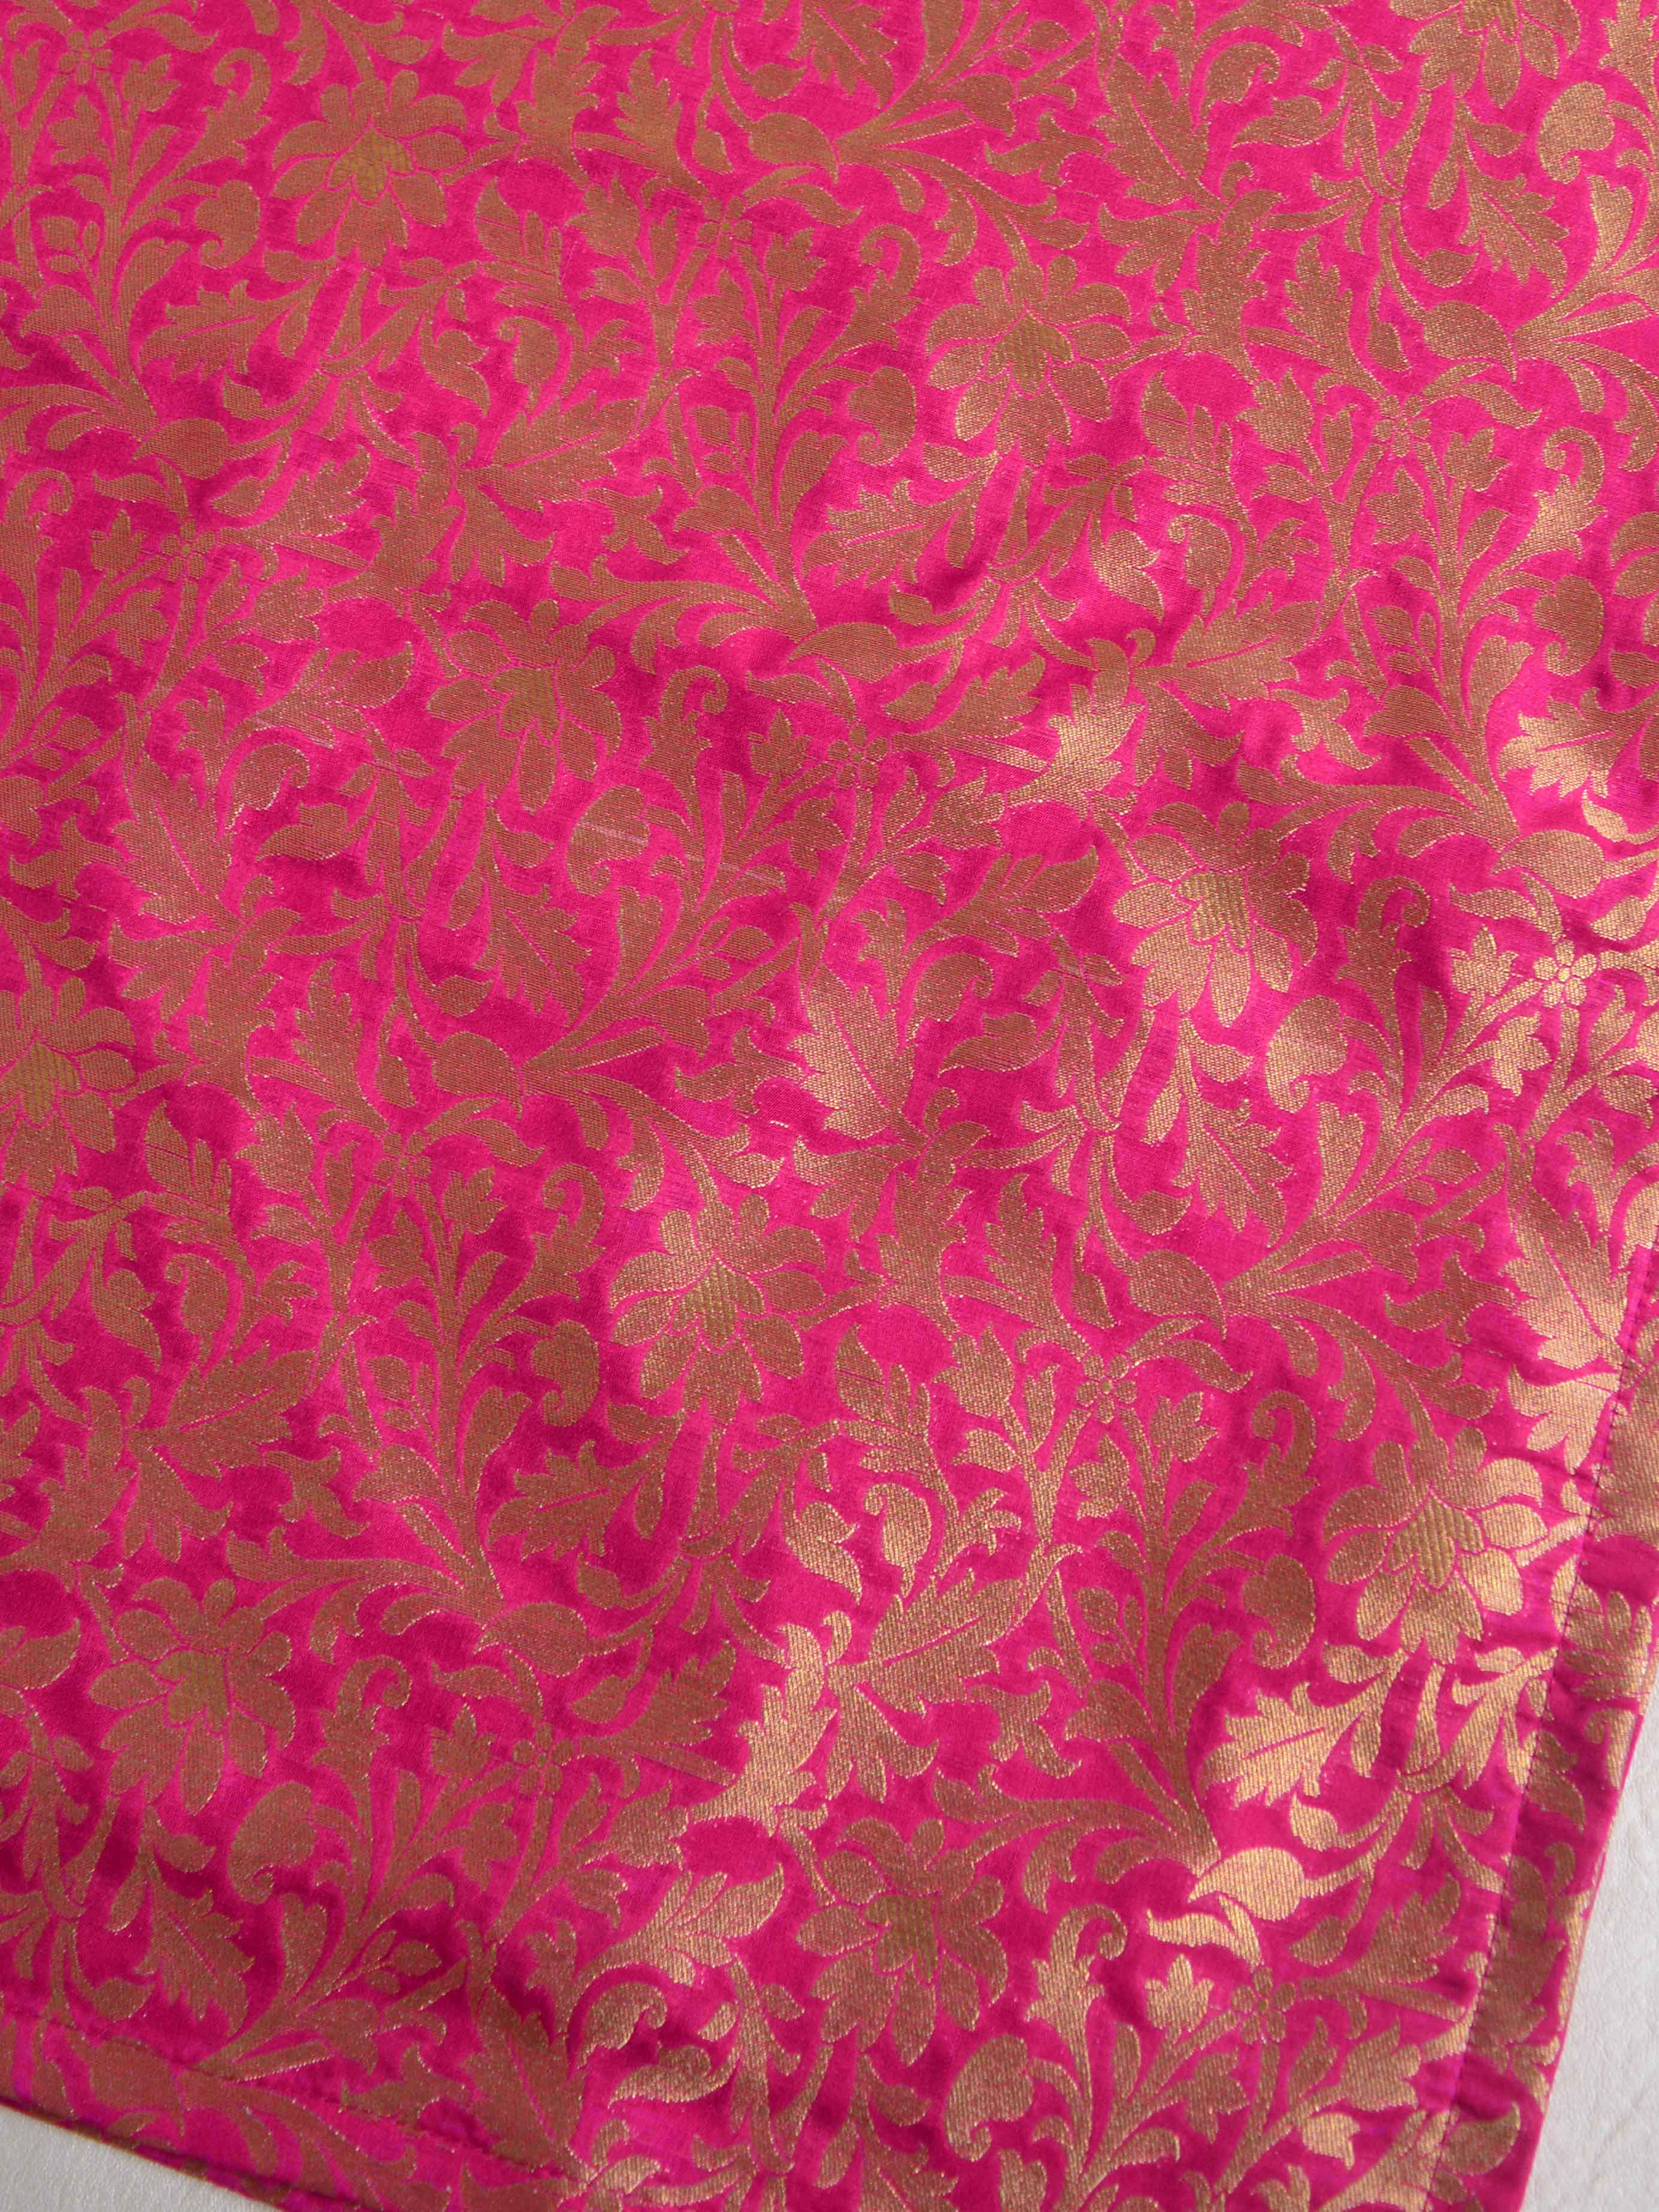 Banarasee Silk Brocade Salwar Kameez Fabric With Hand-Embroidered Dupatta-Hot Pink & Teal